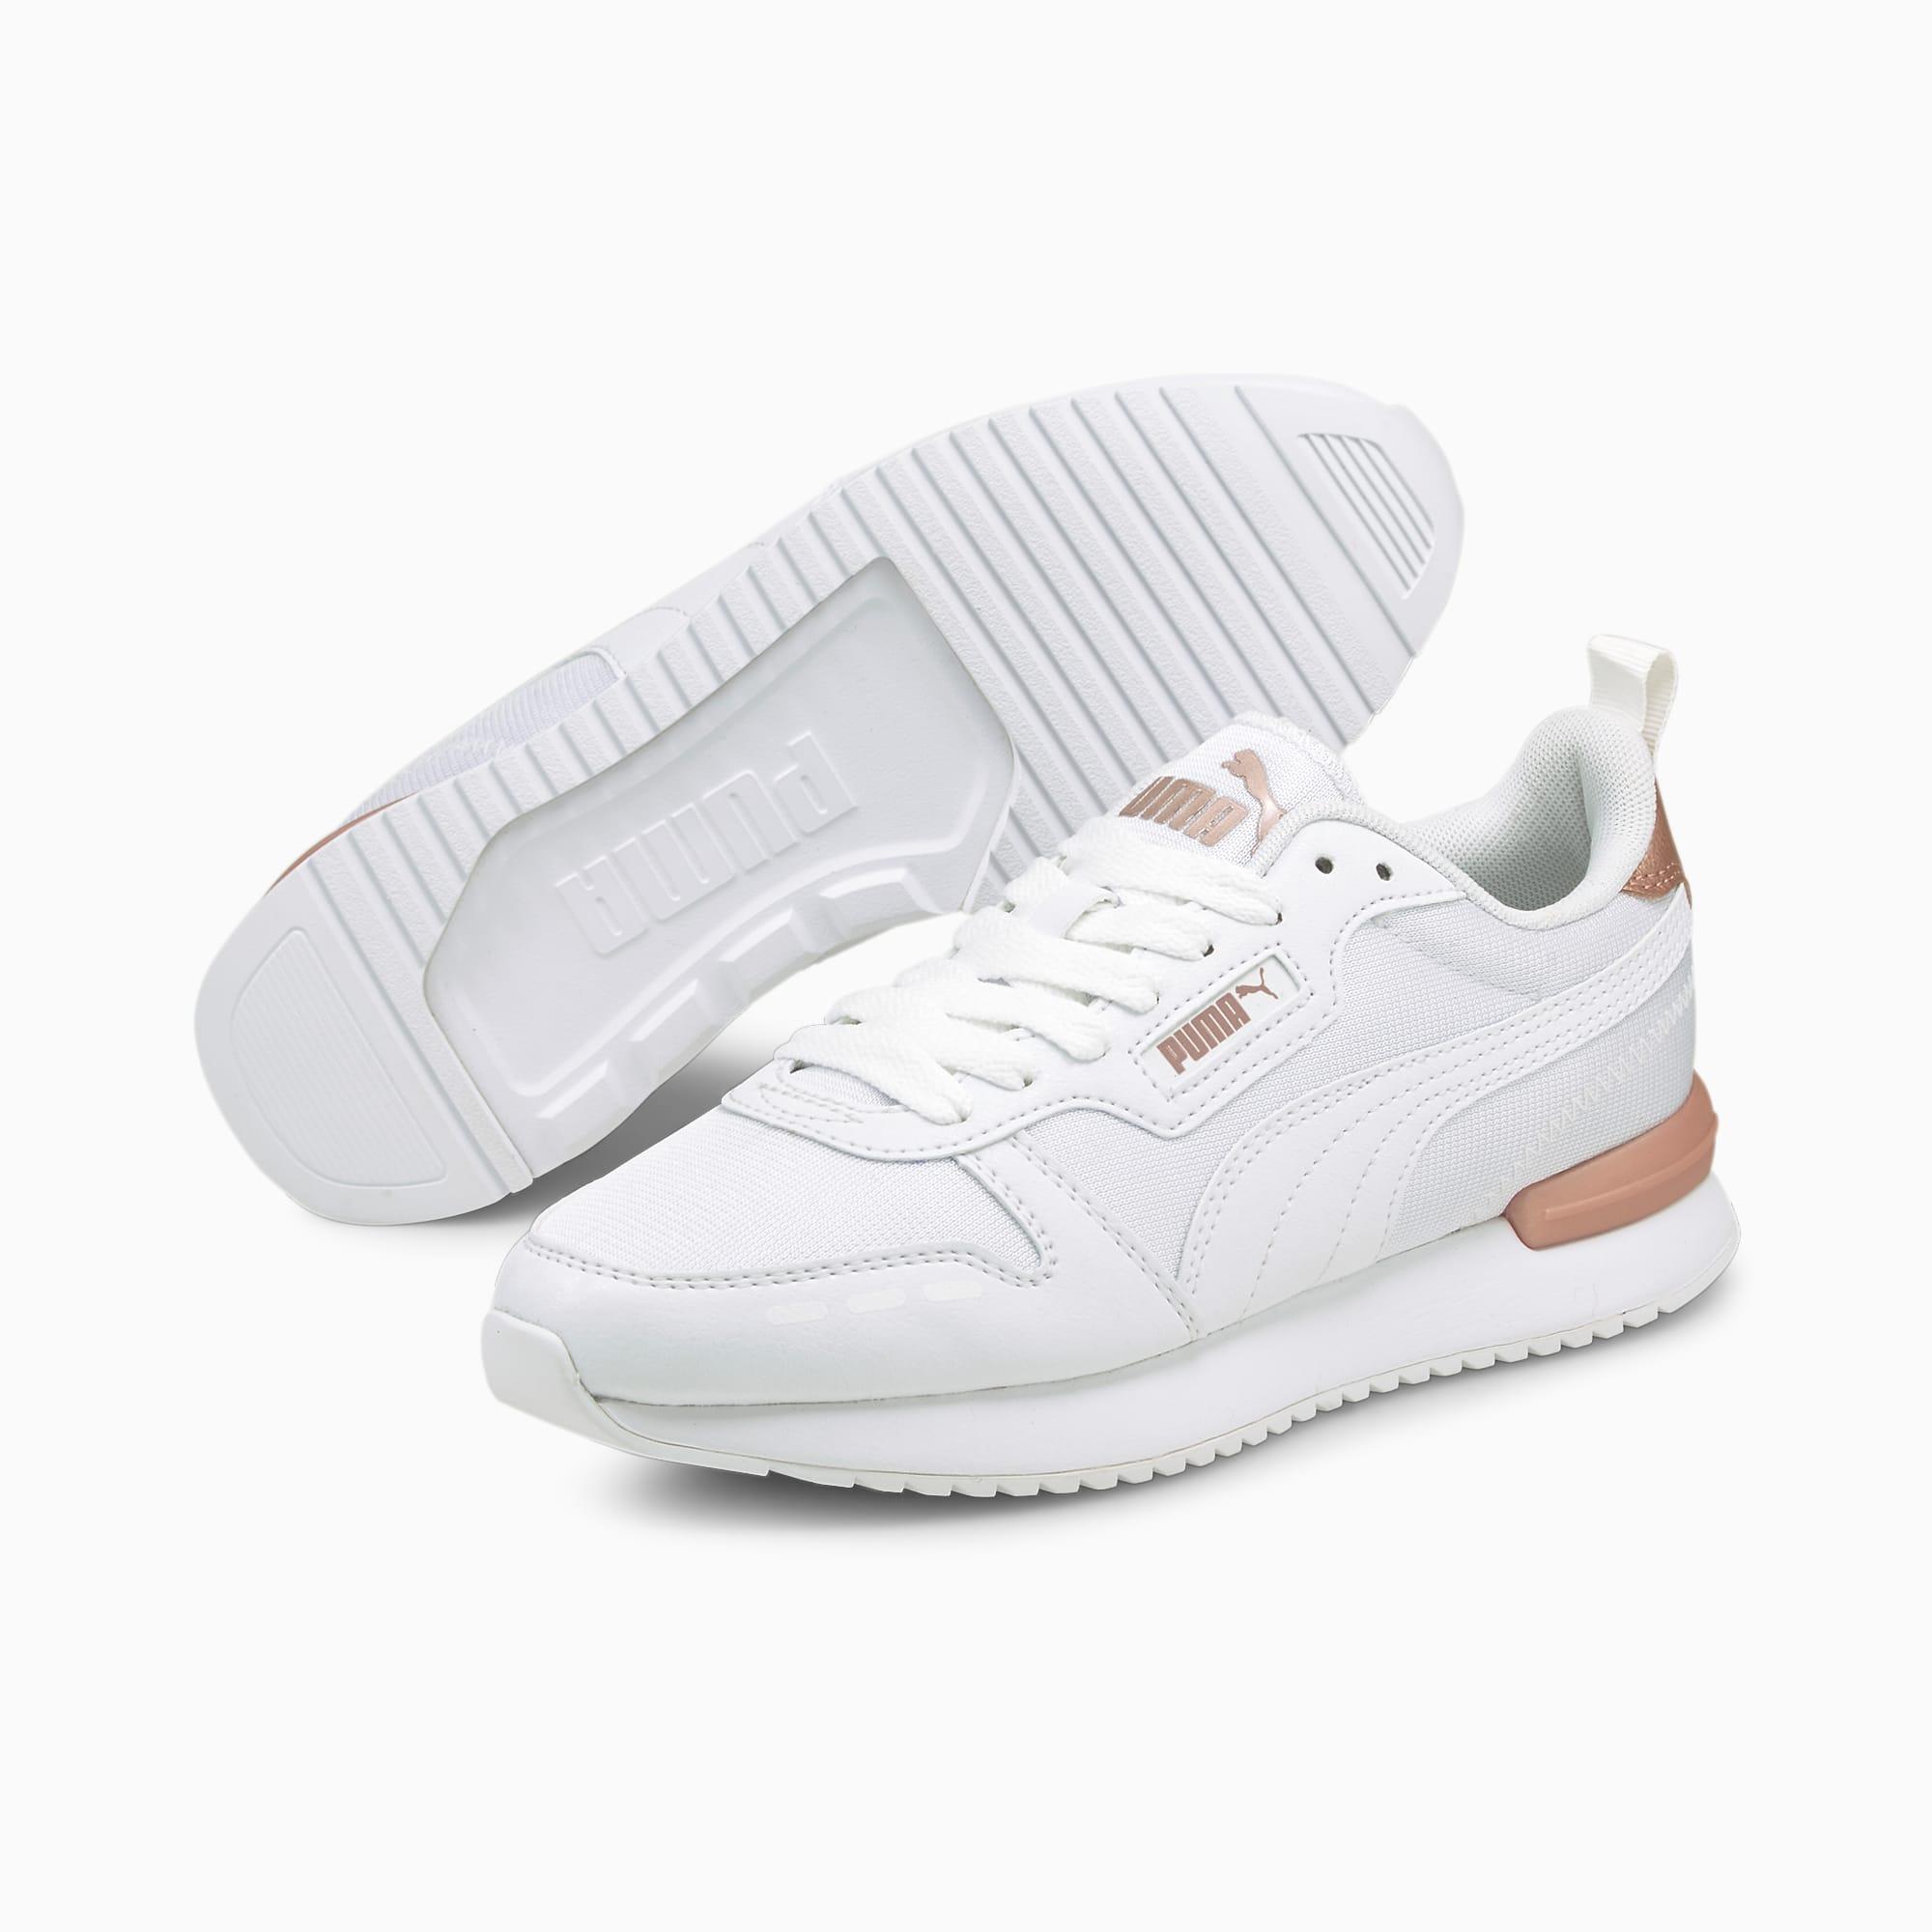 Scarpe da ginnastica R78 Metallic PopPUMA in Materiale sintetico di colore Bianco Donna Sneaker da Sneaker PUMA 86% di sconto 